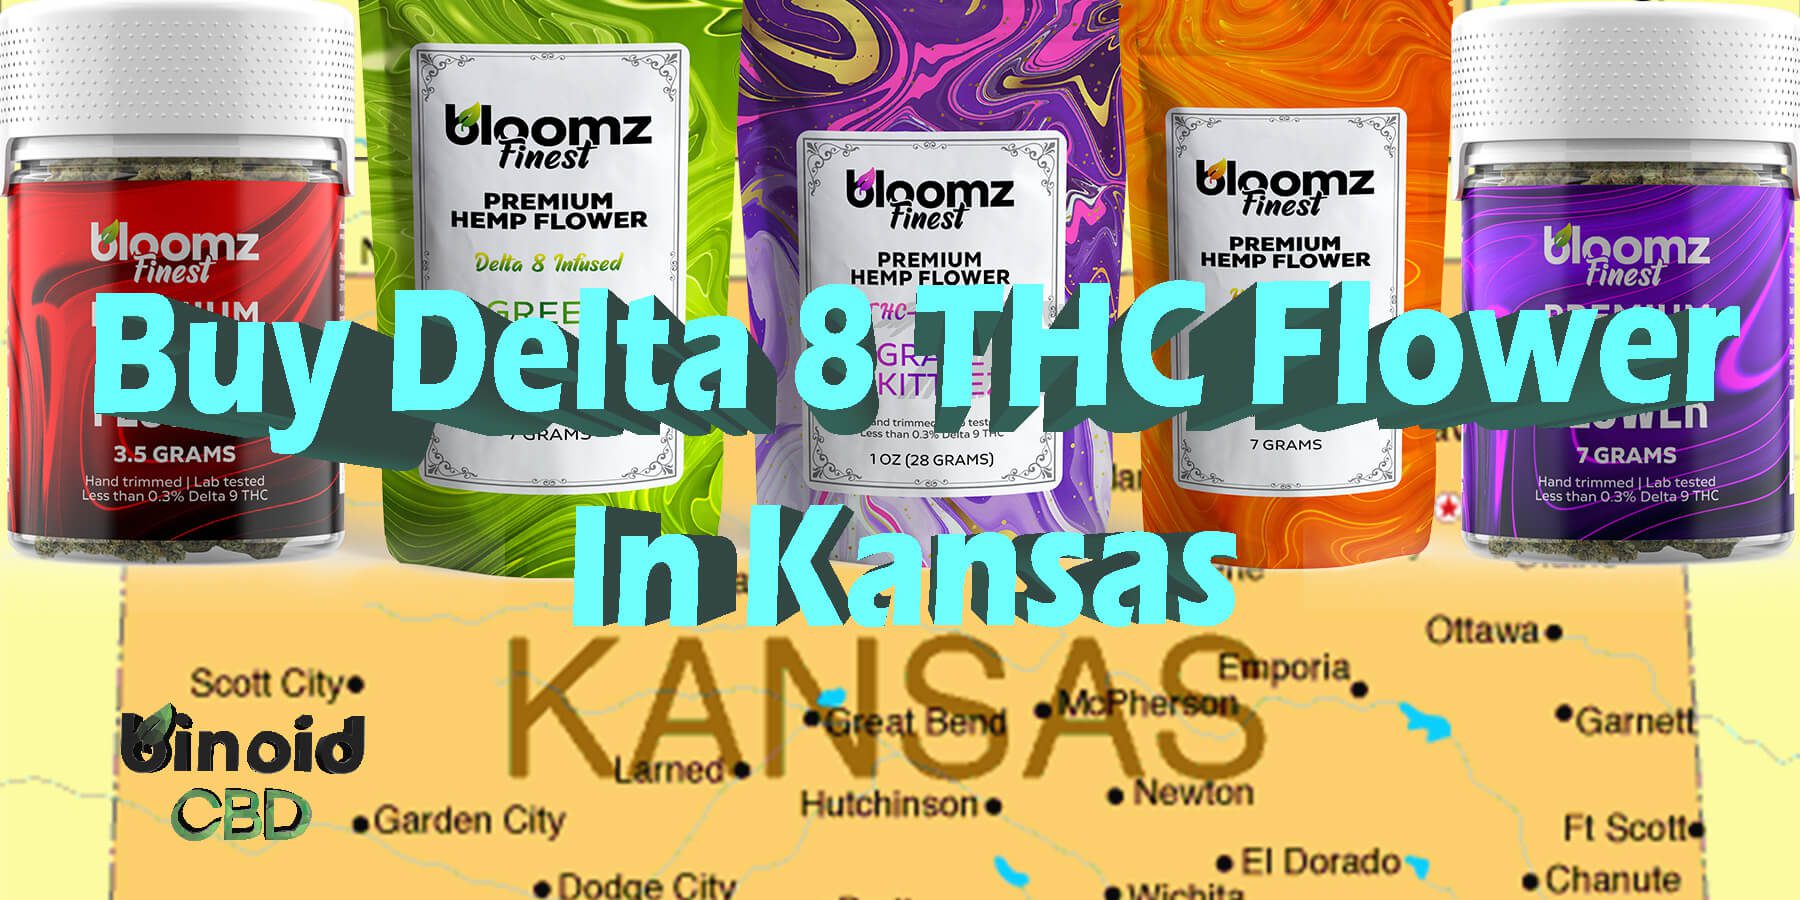 Buy-Delta-8-THC-Hemp Flower Kansas Get Near Me Best Price Place To Get Legal Strongest Best Brand Reddit